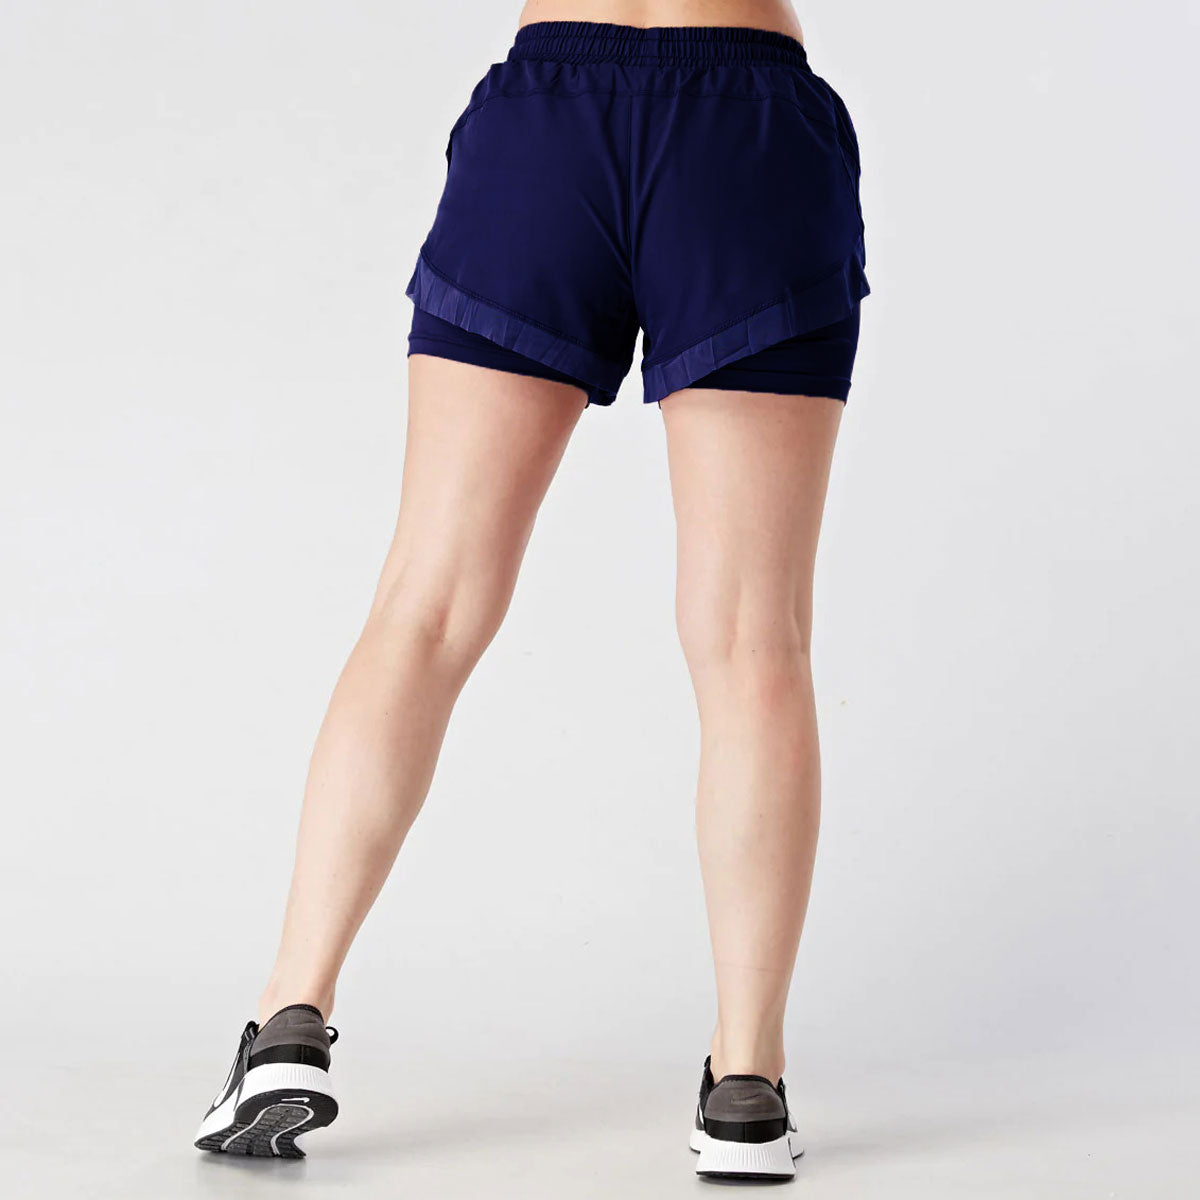 RONEX Women's Compression Mesh Liner Shorts